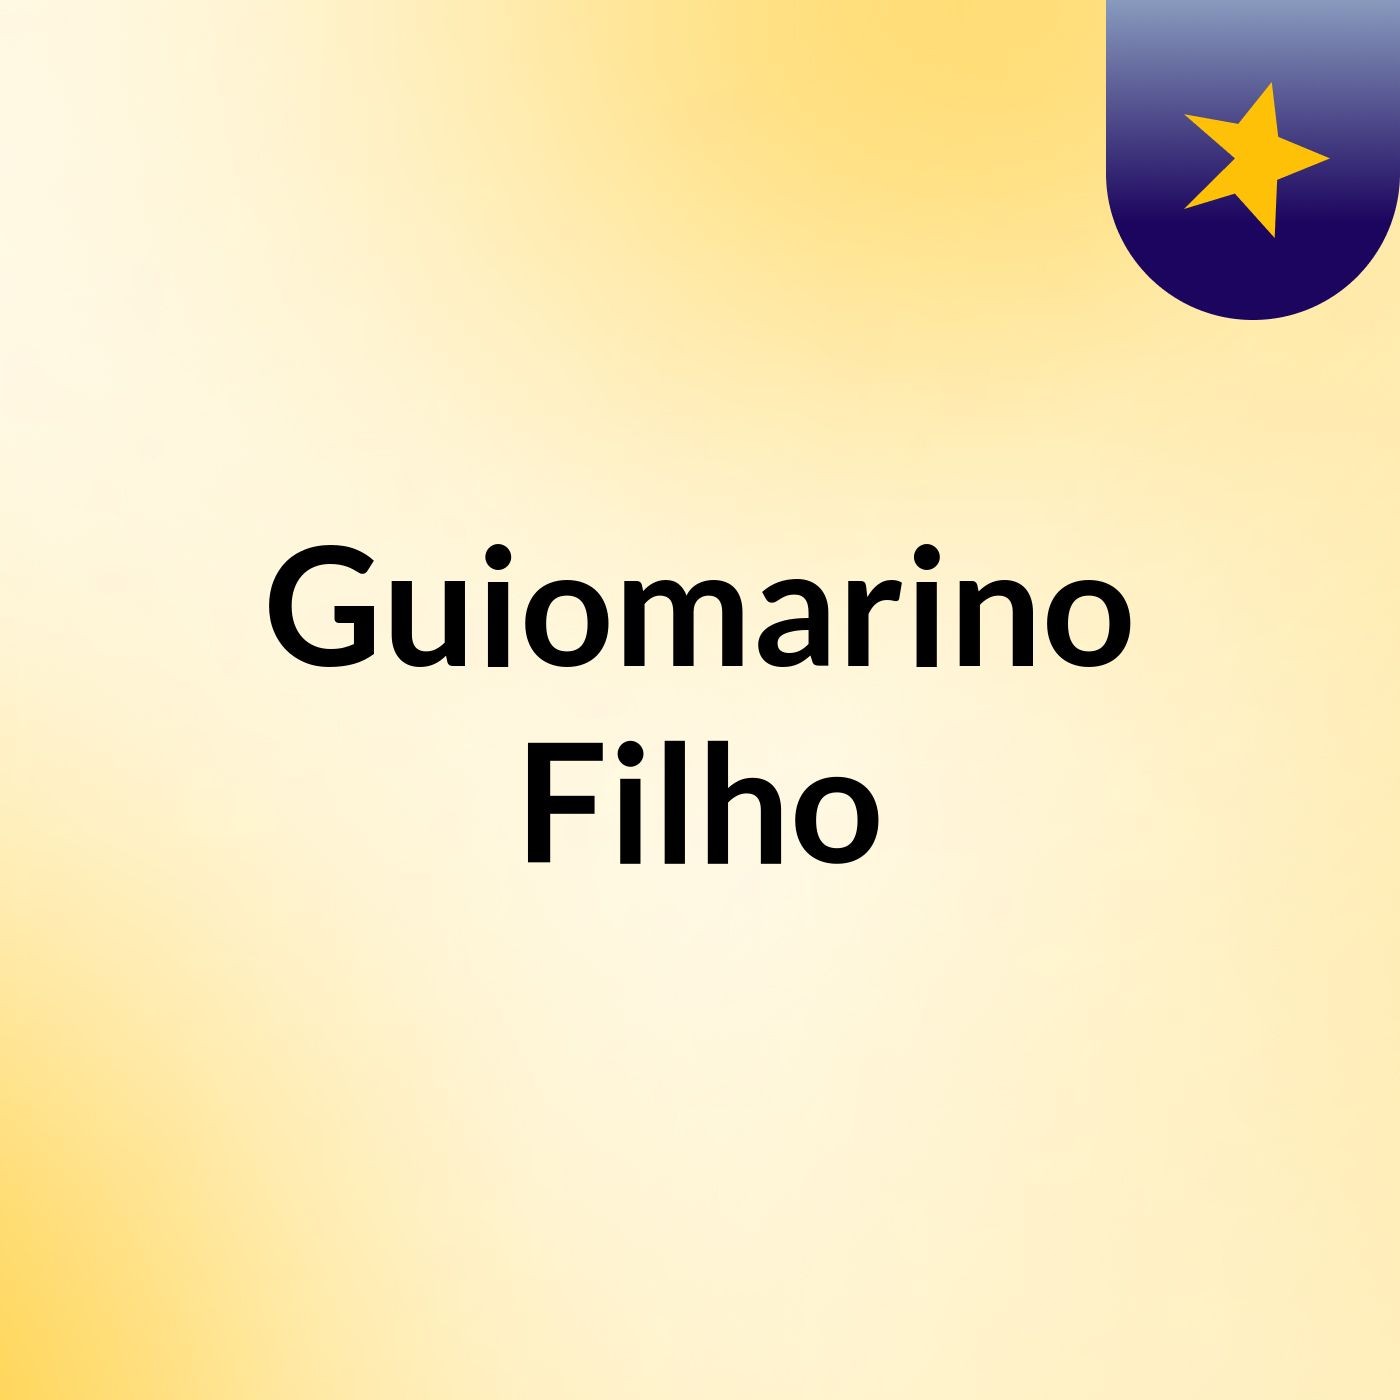 Guiomarino Filho